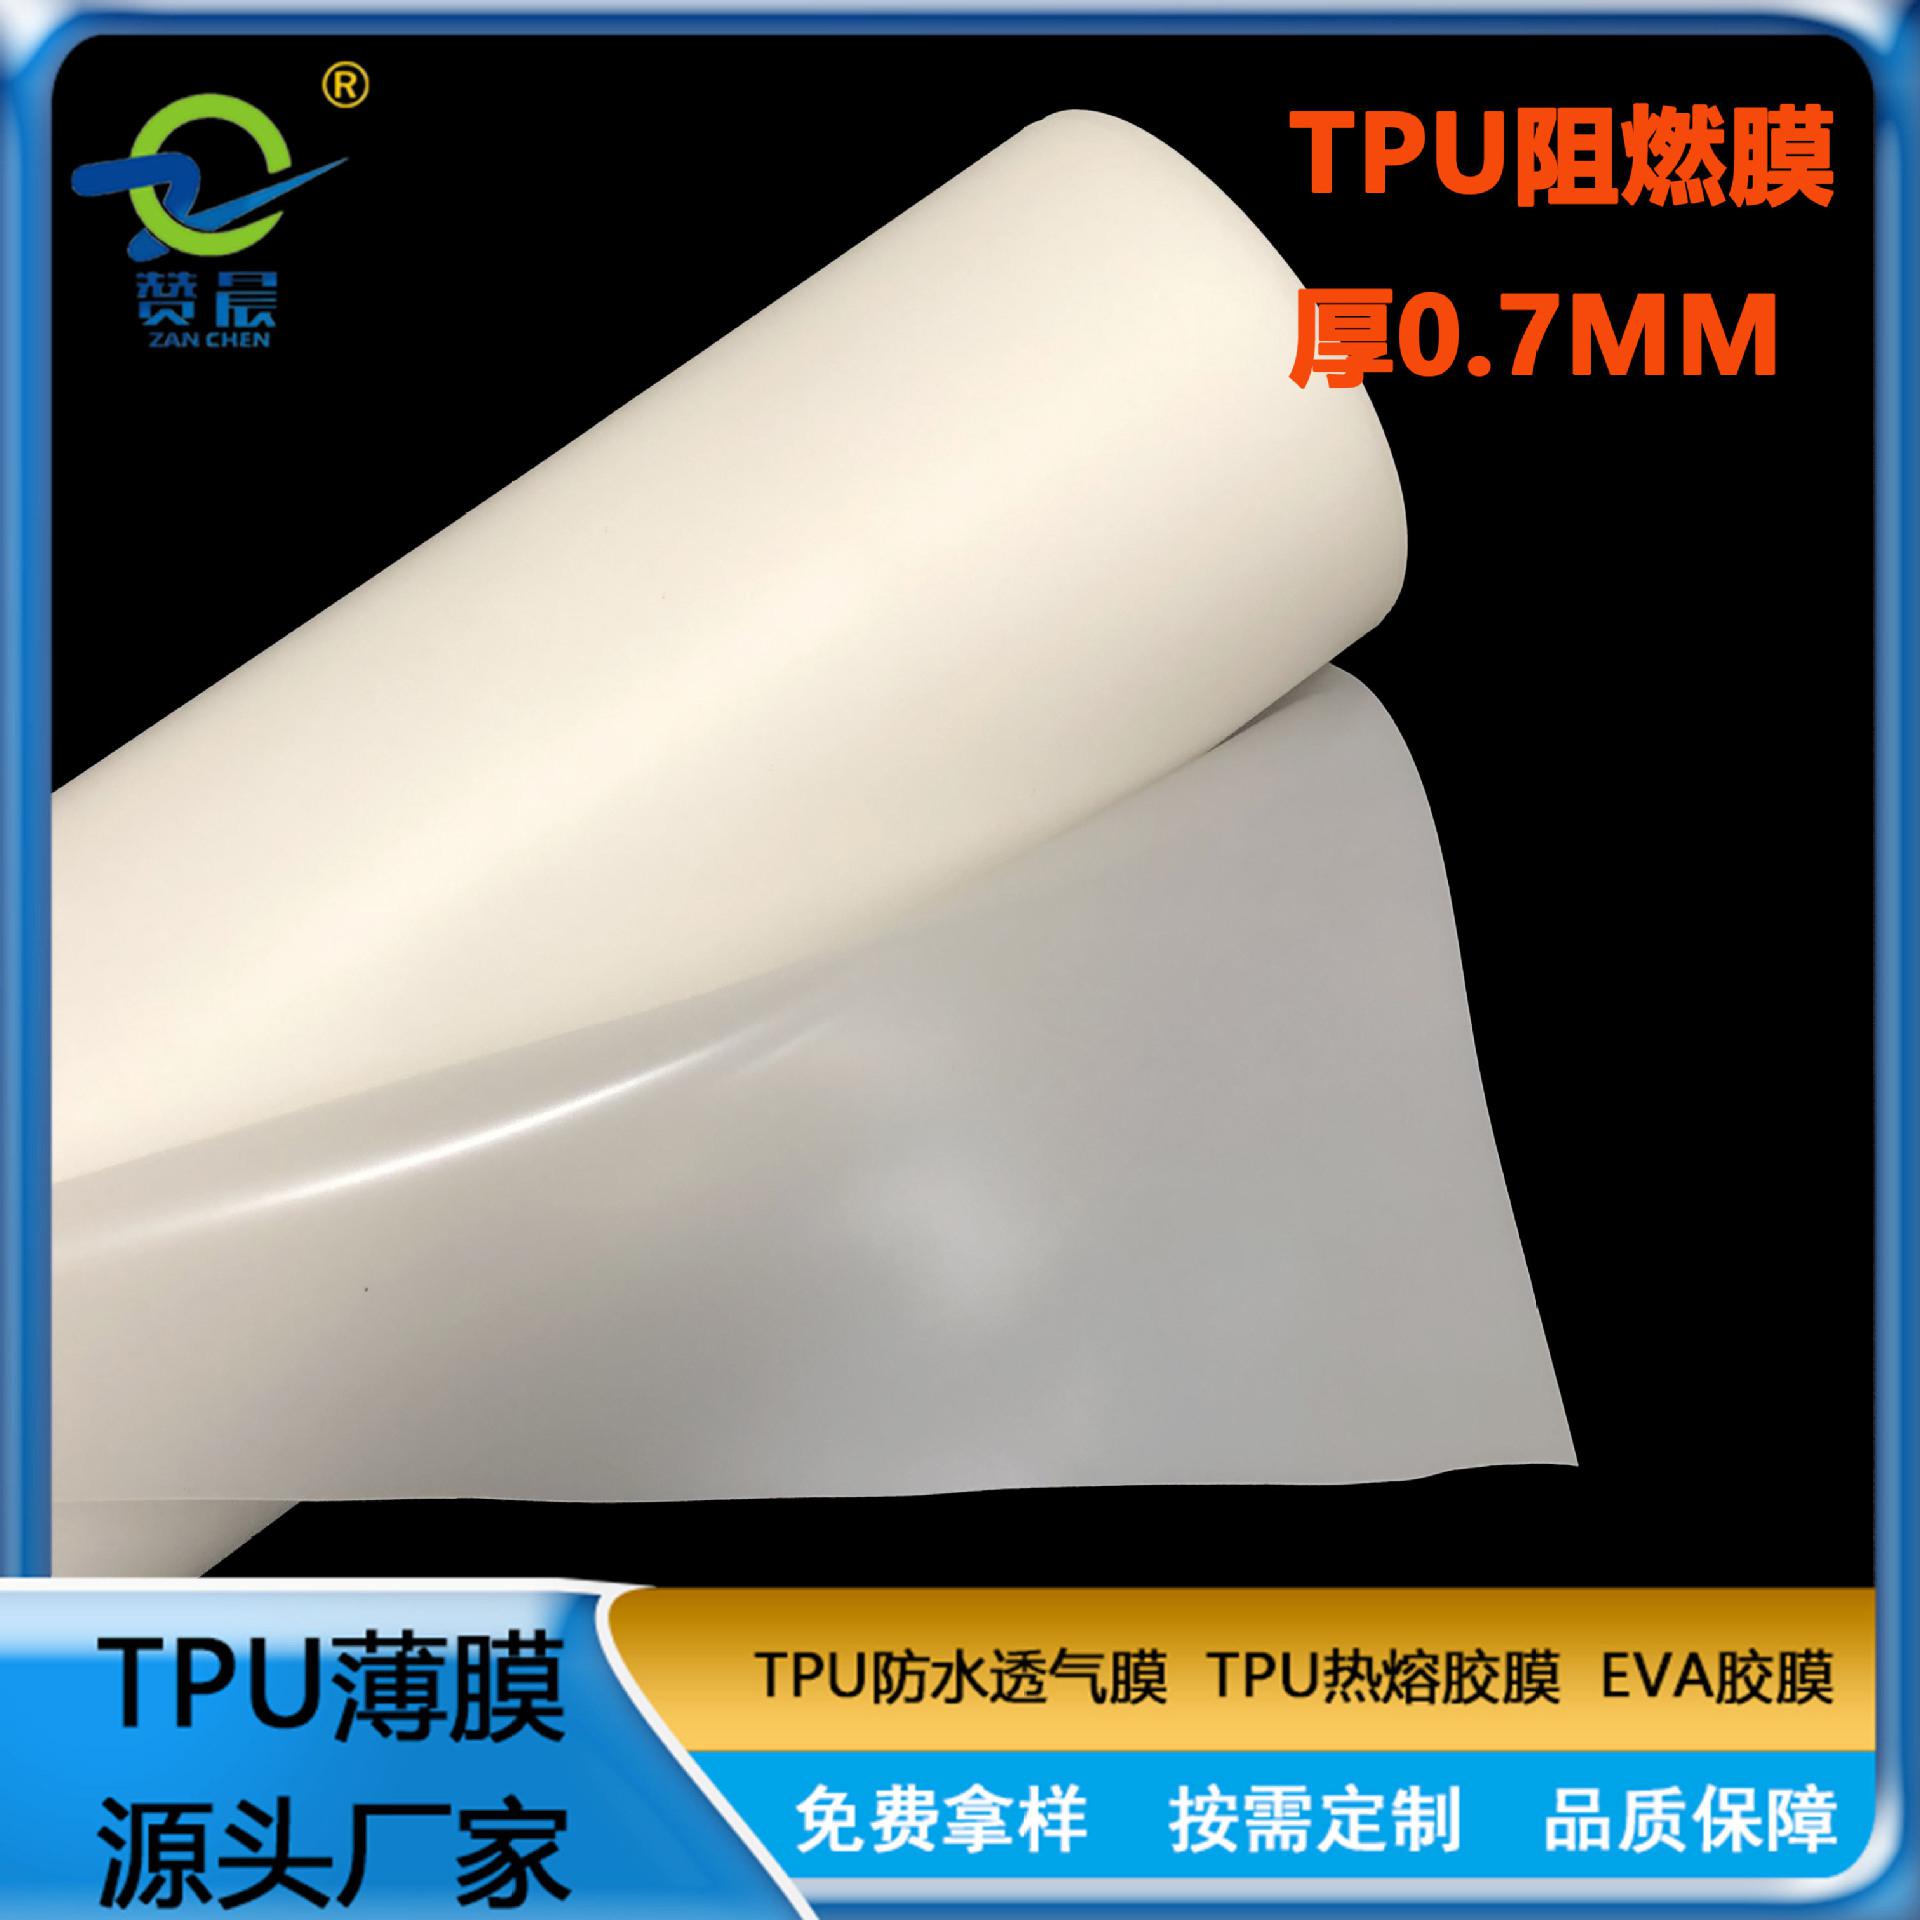 TPU阻燃防火膜 V0等级 UL94 广州市tpu薄膜厂家 可定制  ZC